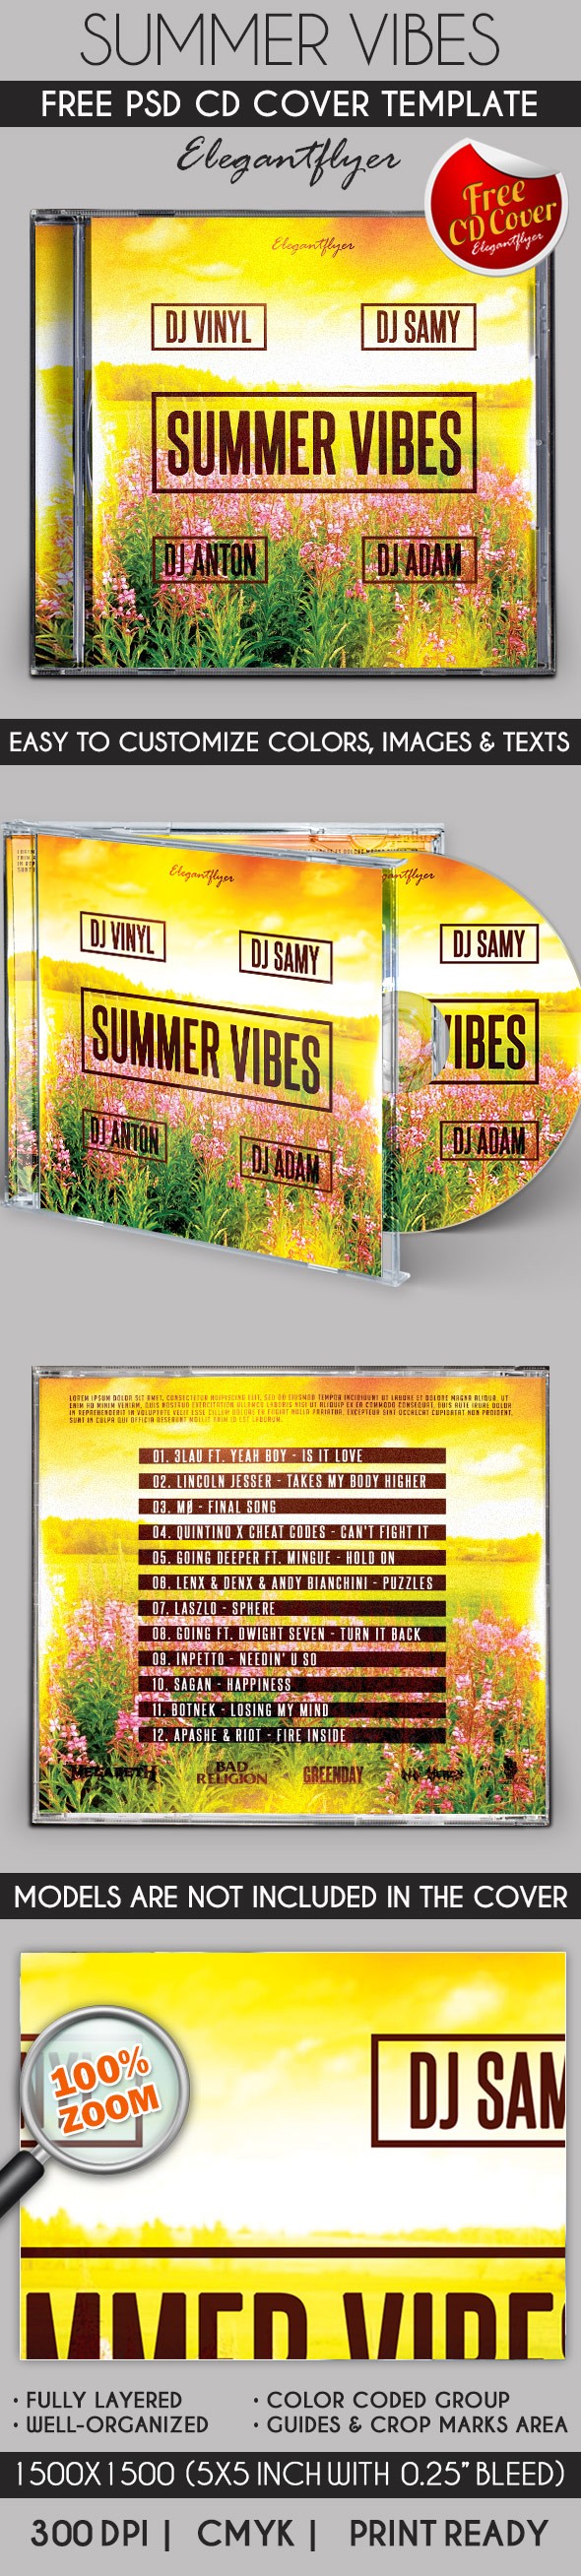 Summer Vibes Free CD template by ElegantFlyer